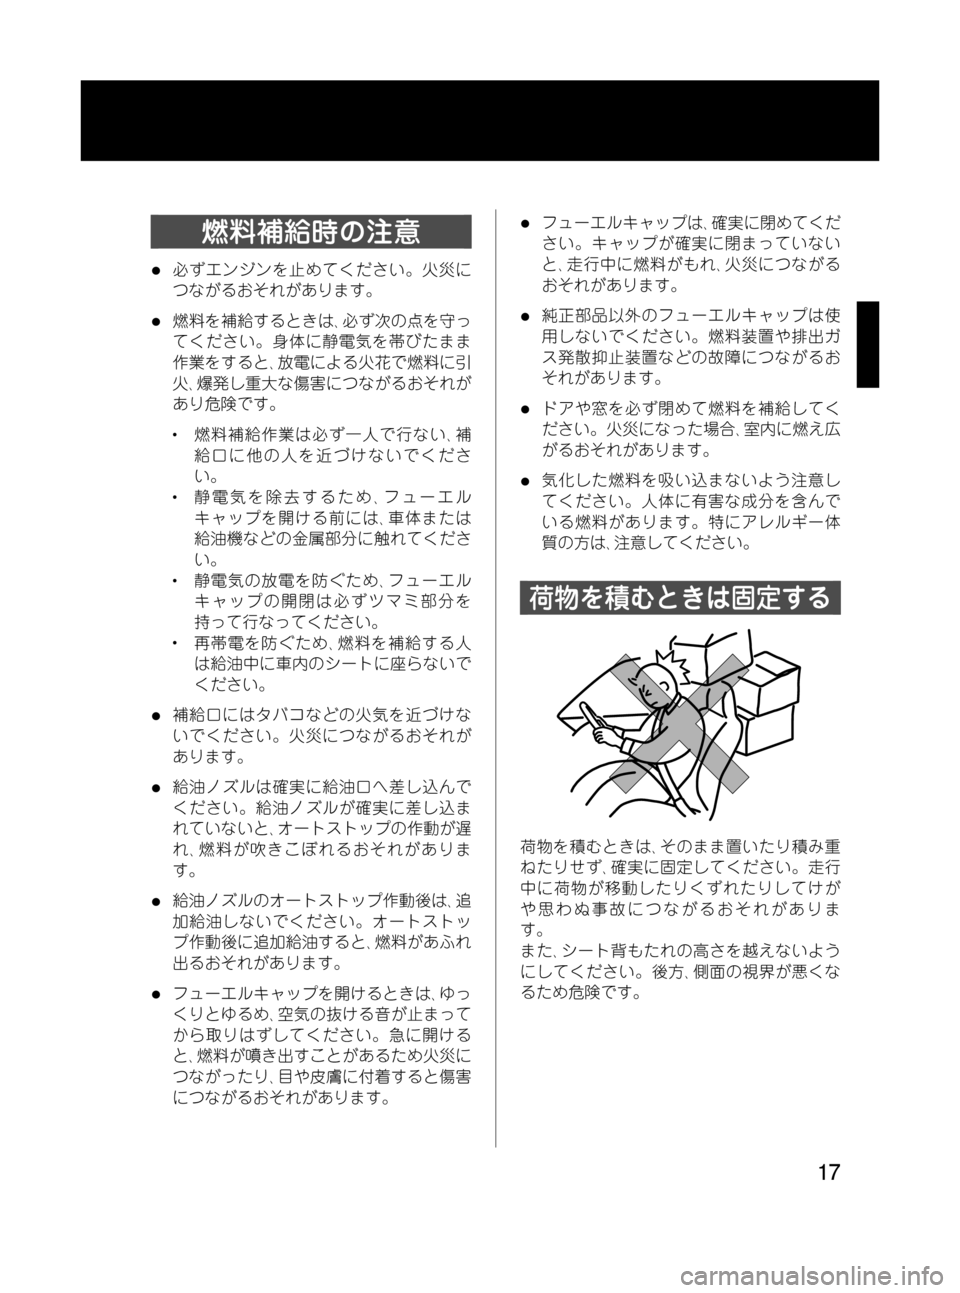 MAZDA MODEL RX 8 2008  取扱説明書 (in Japanese) Black plate (17,1)
燃料補給時の注意
l必ずエンジンを止めてください。火災に
つながるおそれがあります。
l燃料を補給するときは､必ず次の点を守っ
�